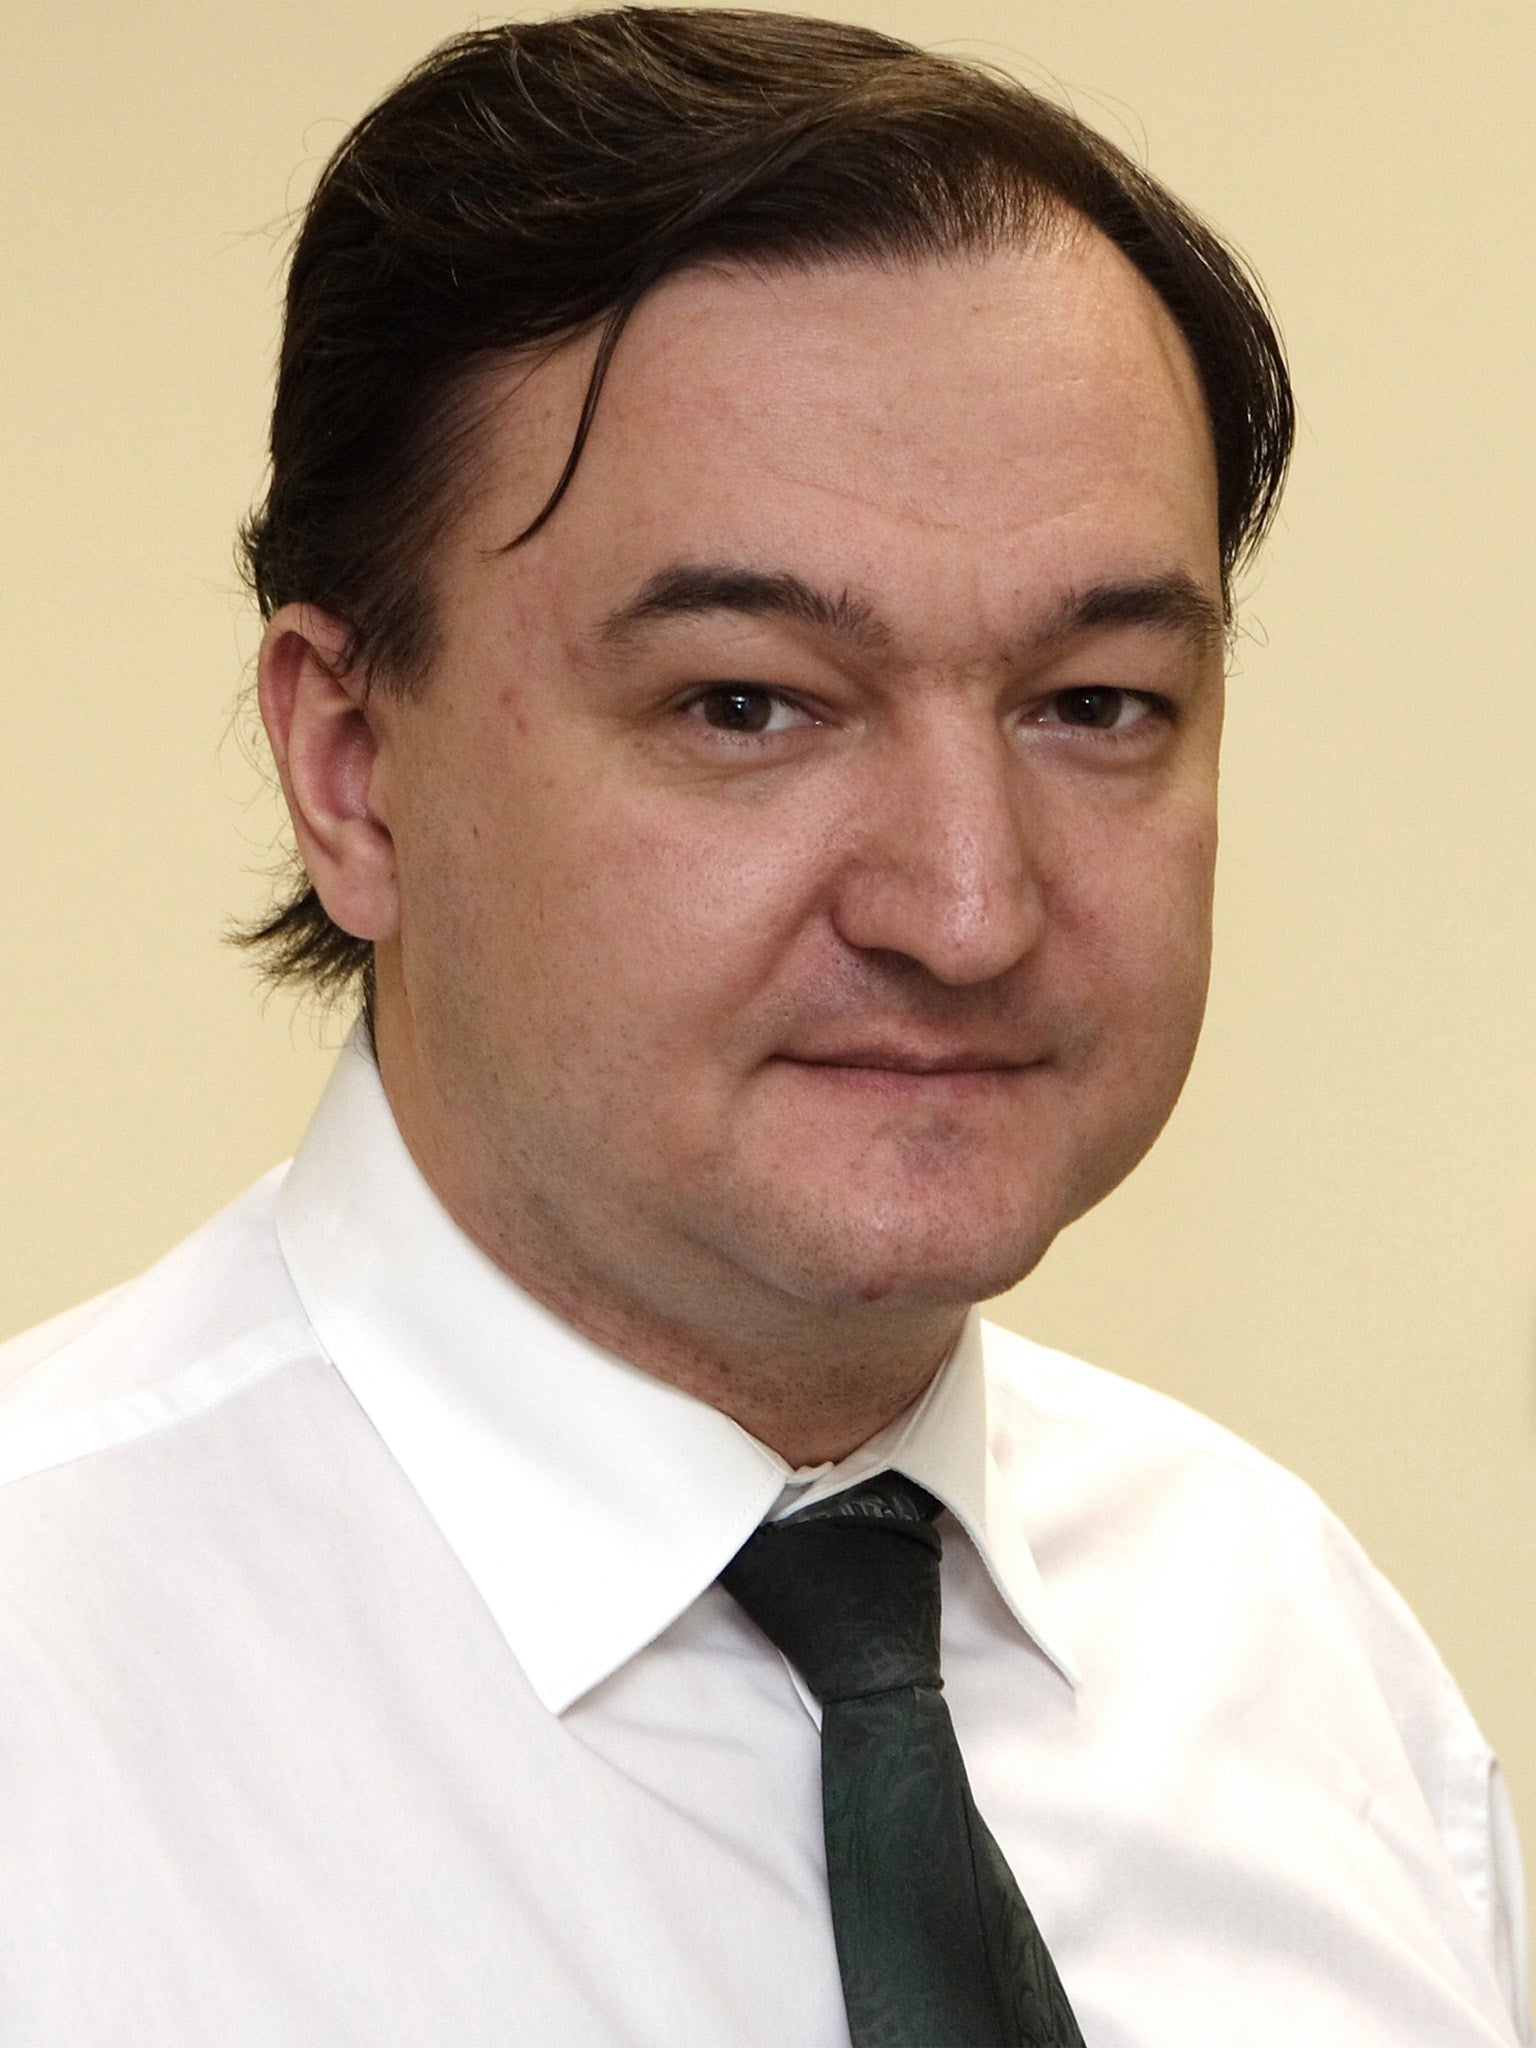 Sergei Magnitsky died in custody nine months after he was arrested